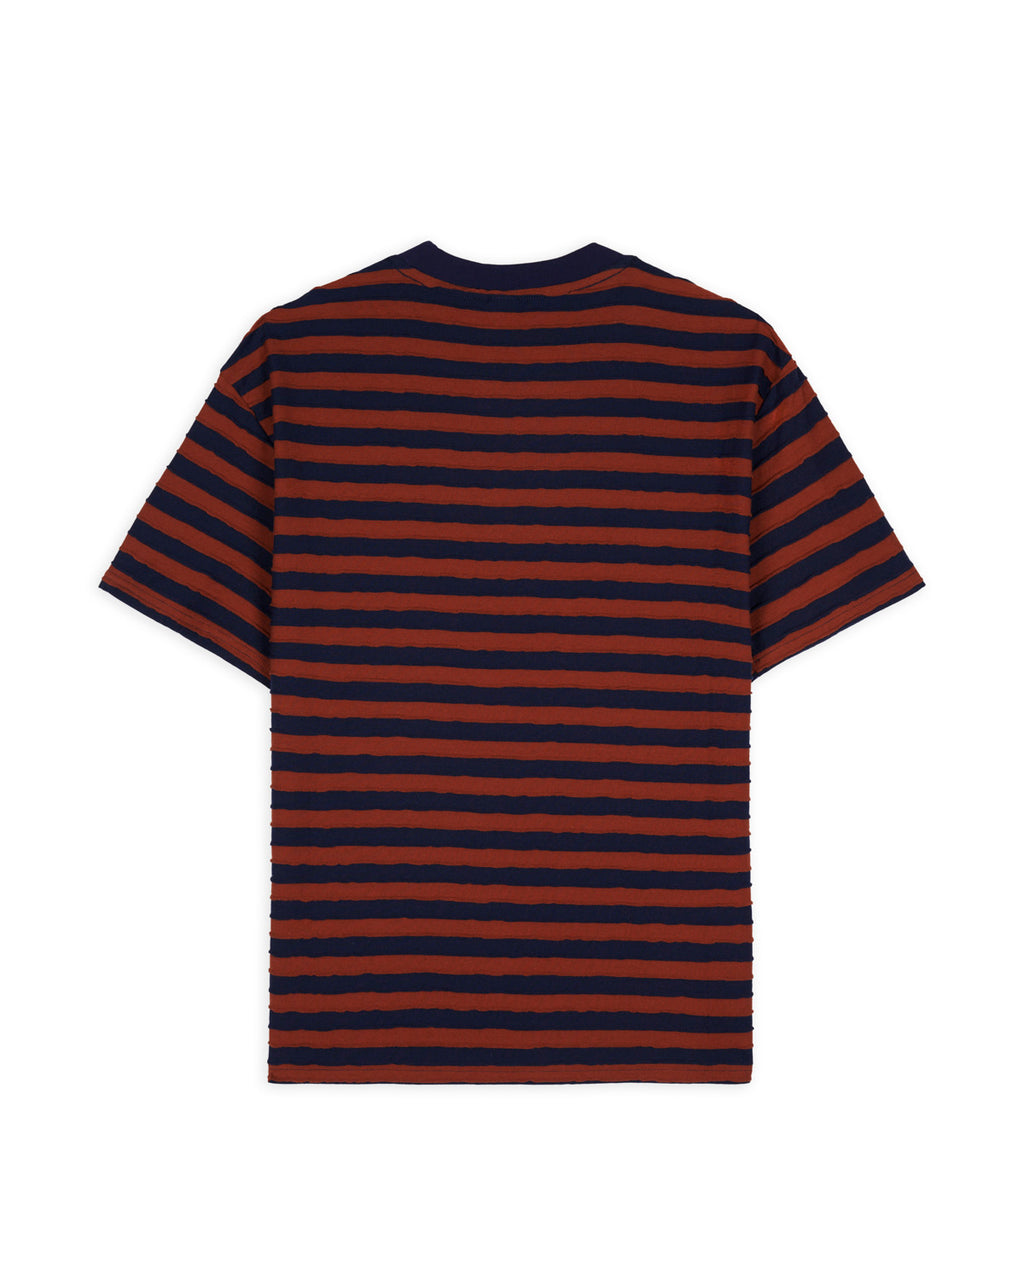 Denny Blaine Striped T-Shirt - Navy/Light Brown – Brain Dead